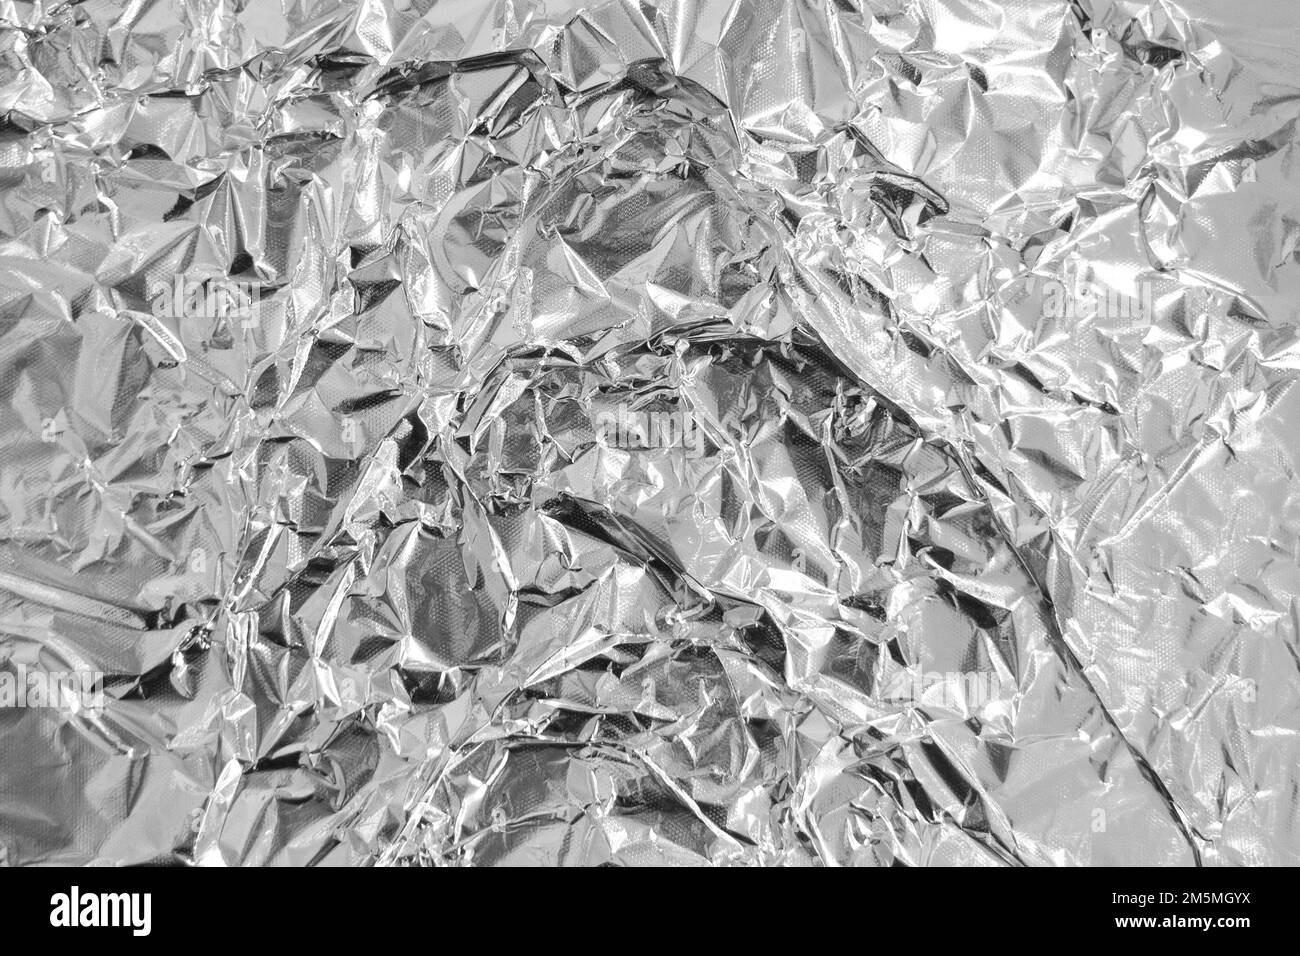 https://c8.alamy.com/comp/2M5MGYX/close-up-of-aluminium-foil-crumpled-silver-aluminium-foil-texture-background-abstract-metallic-paper-pattern-texture-of-crumpled-aluminum-kitchen-f-2M5MGYX.jpg